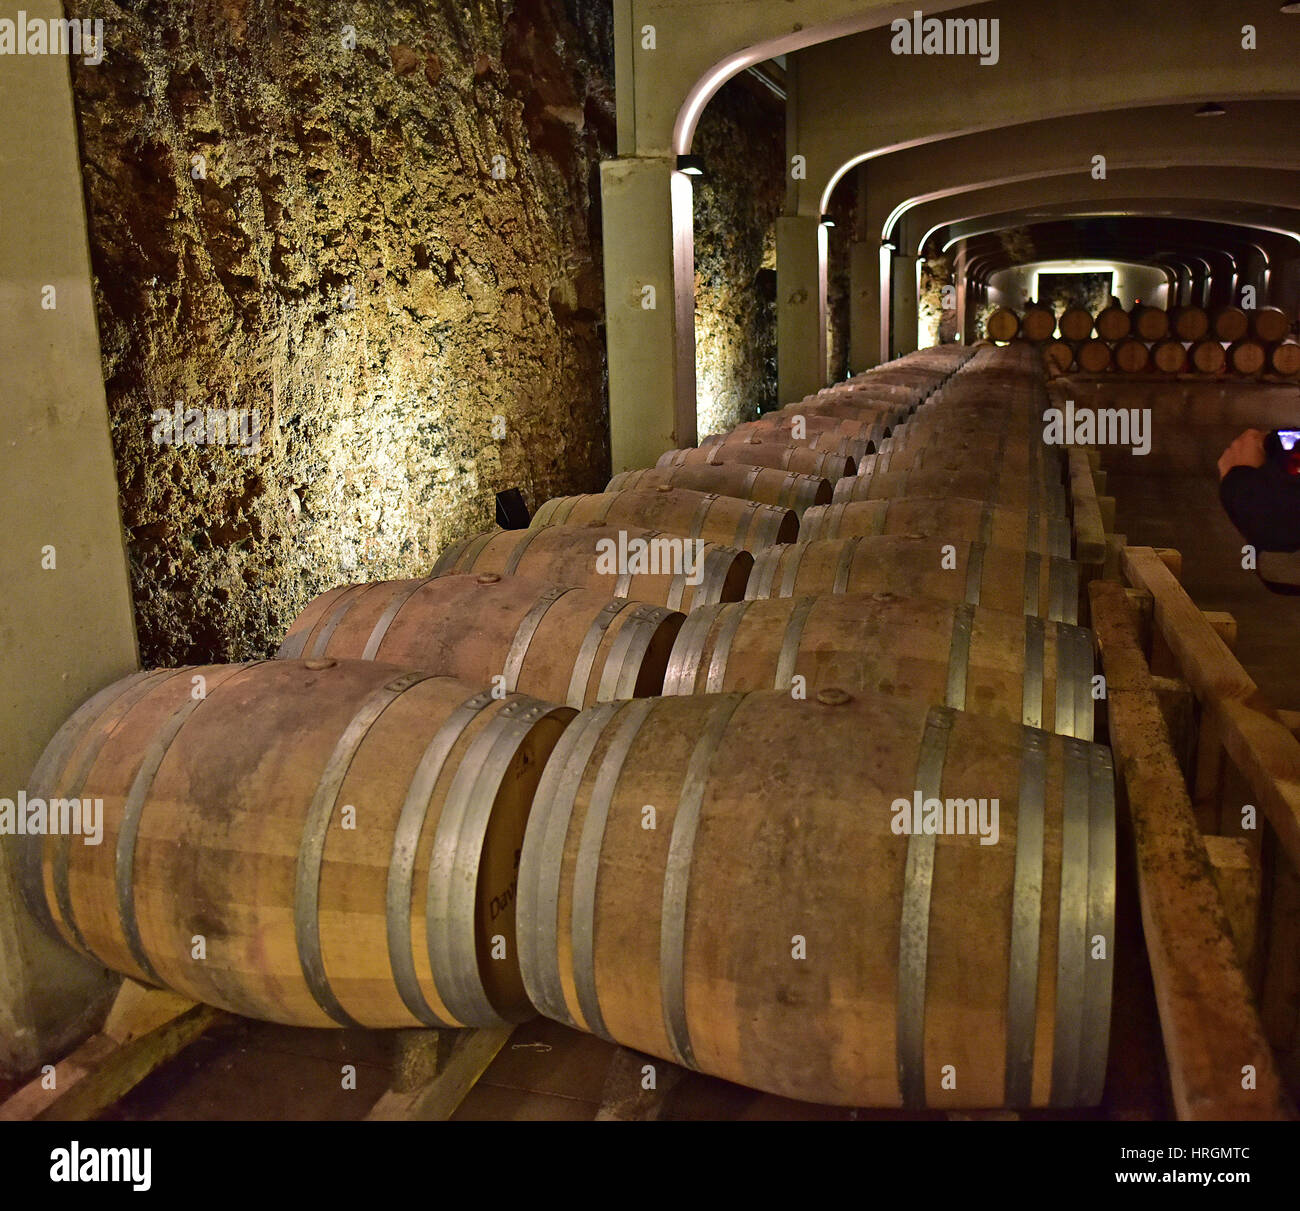 Wooden barrels in winery cellar. Stock Photo